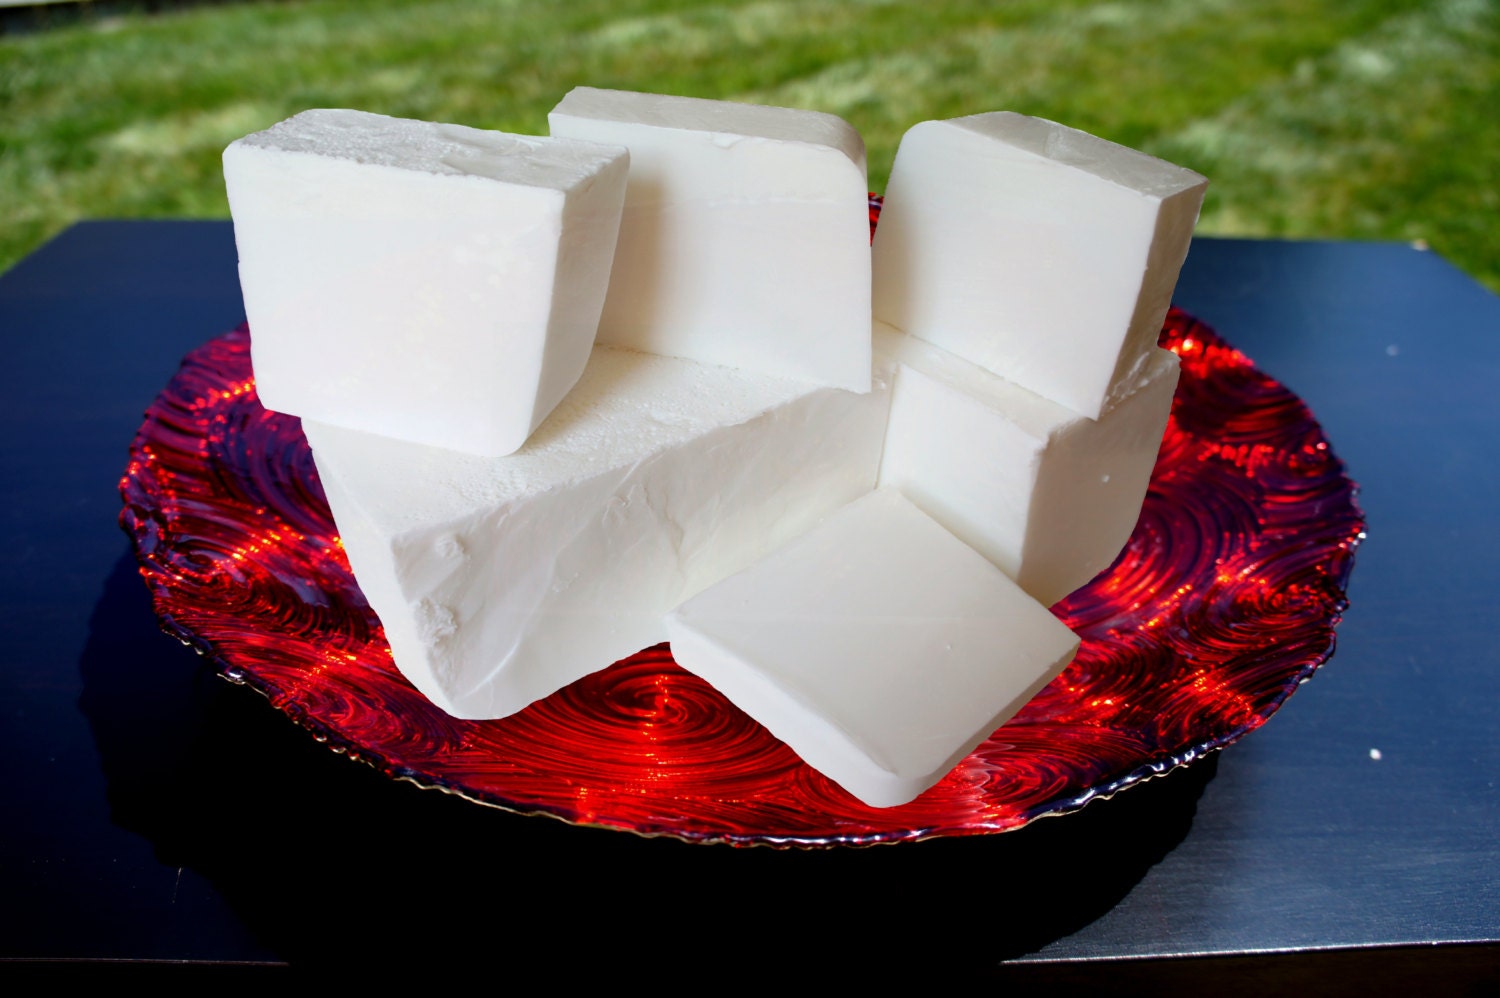 ZENSEM Shea Butter MELT & POUR Soap Base - 5.5 LBS Organic, Vegan Friendly